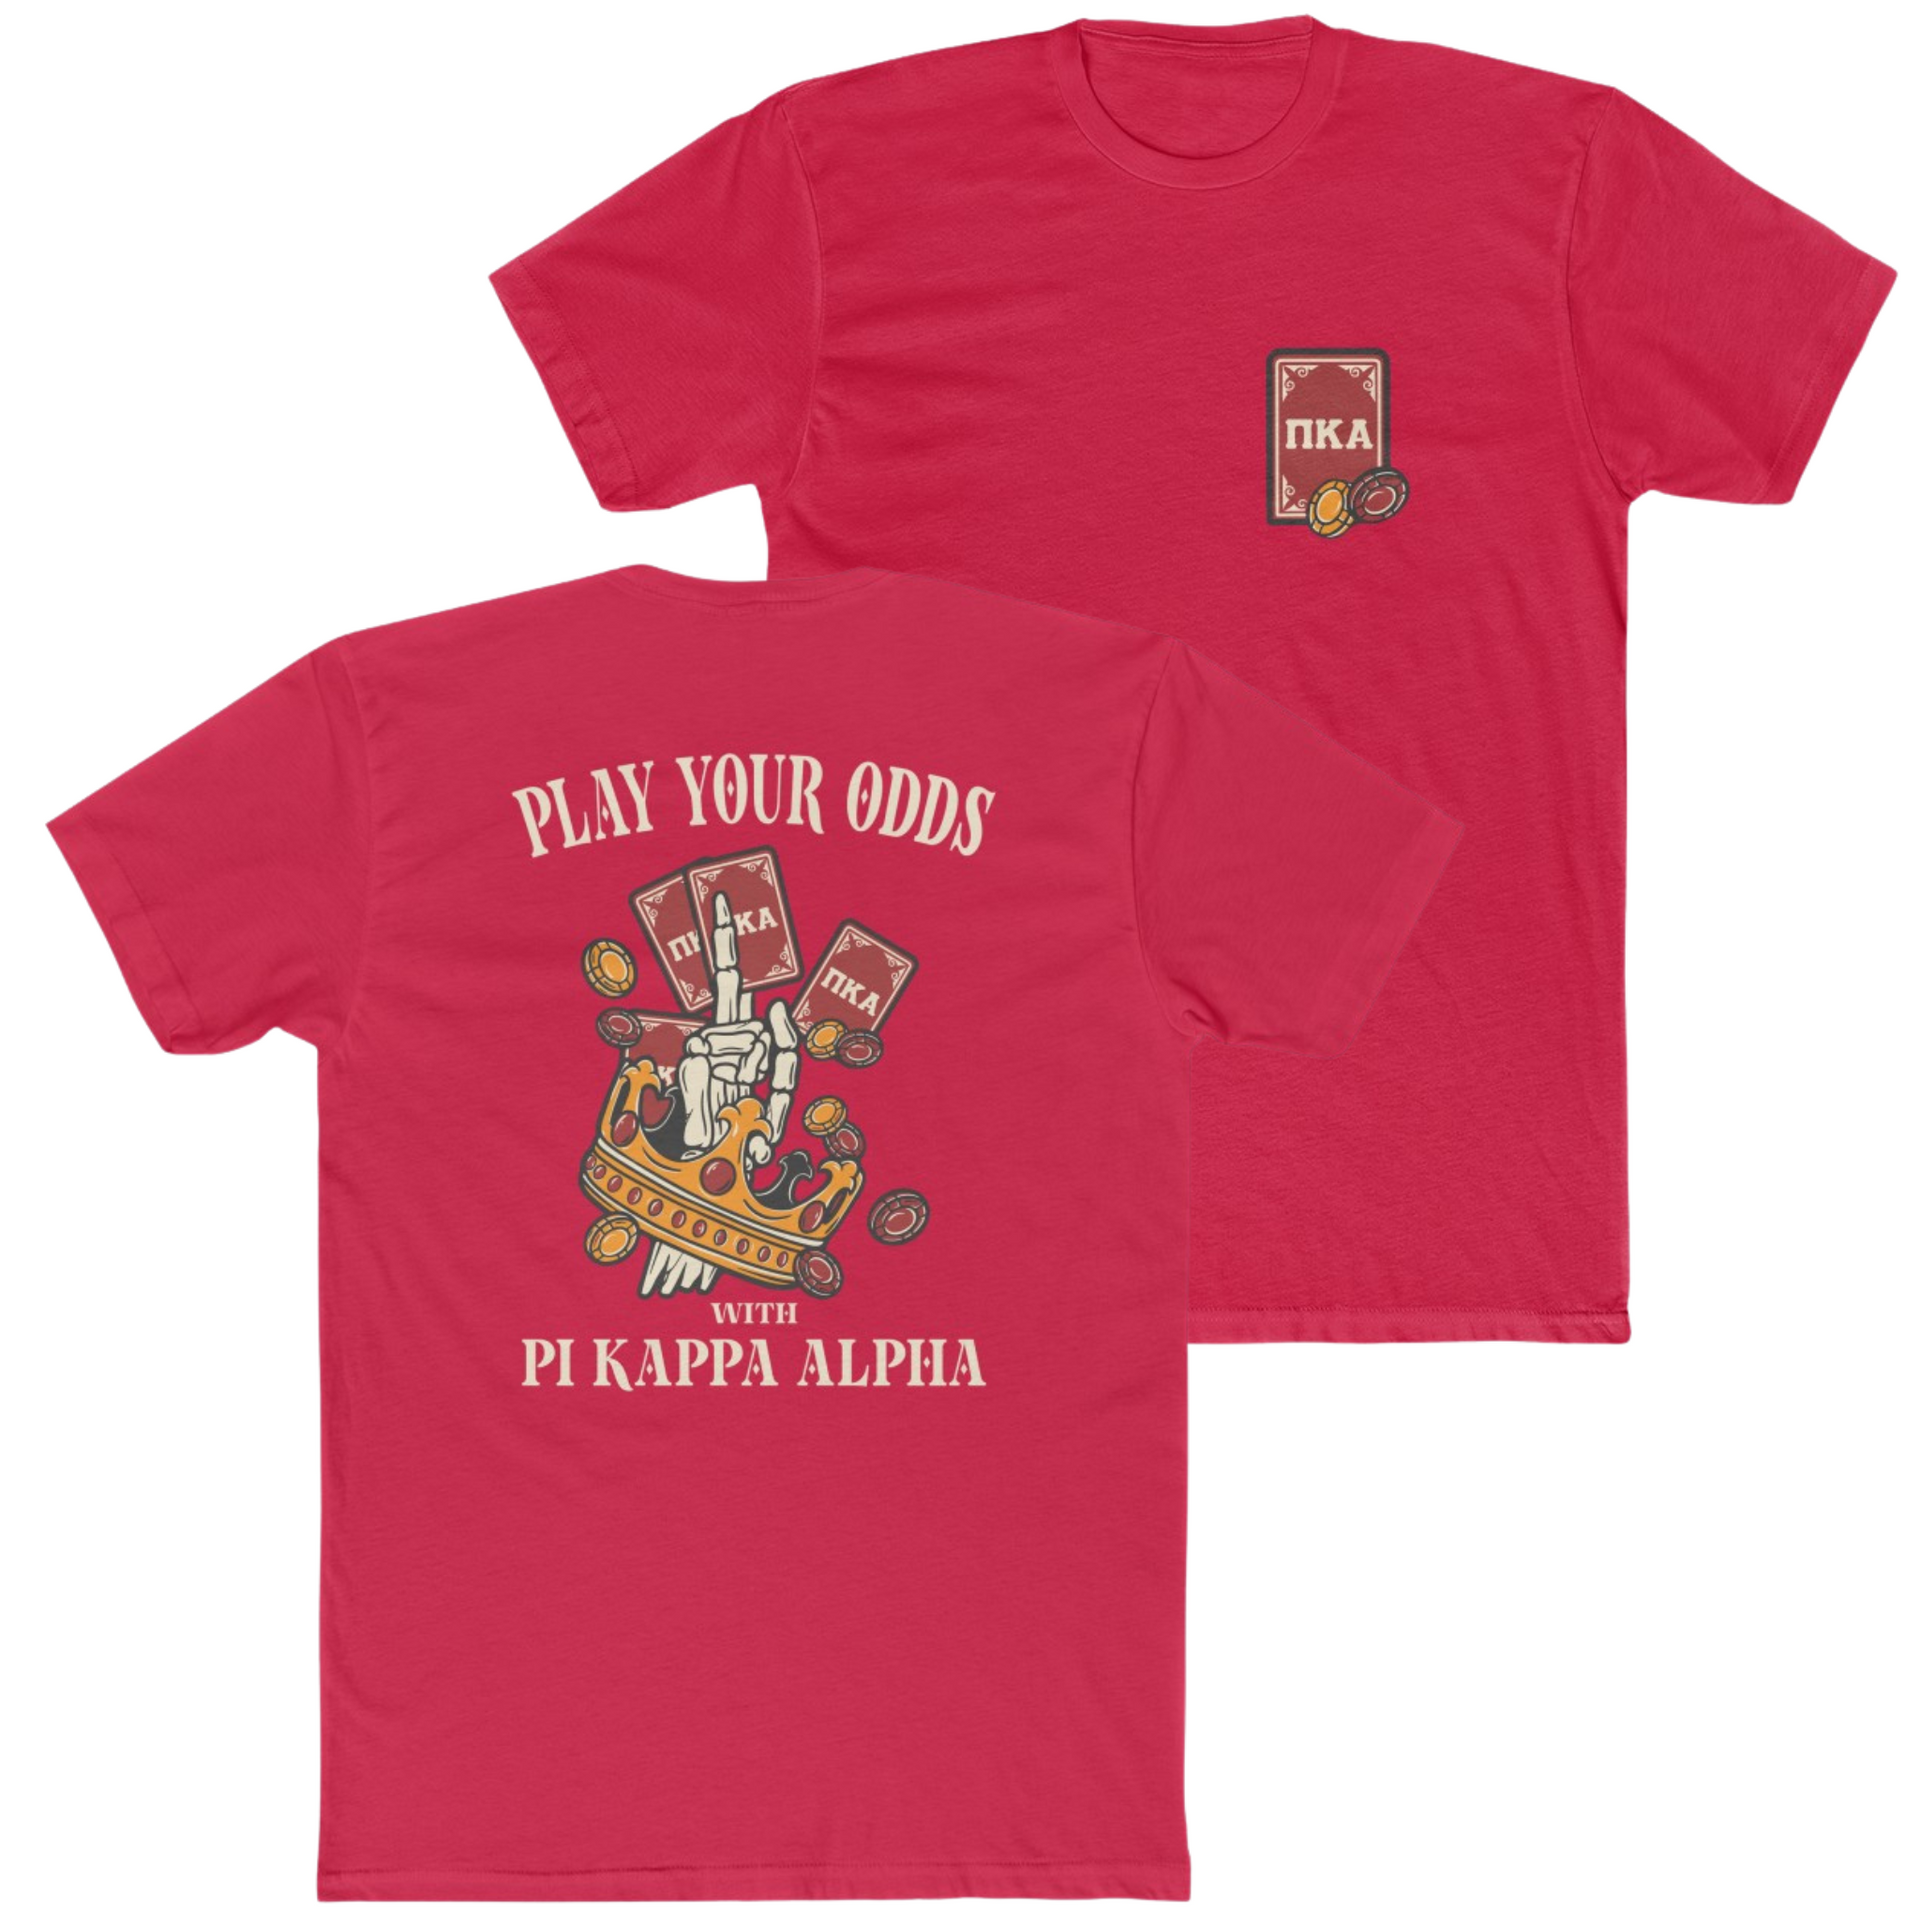 Red Pi Kappa Alpha Graphic T-Shirt | Play Your Odds | Pi kappa alpha fraternity shirt 